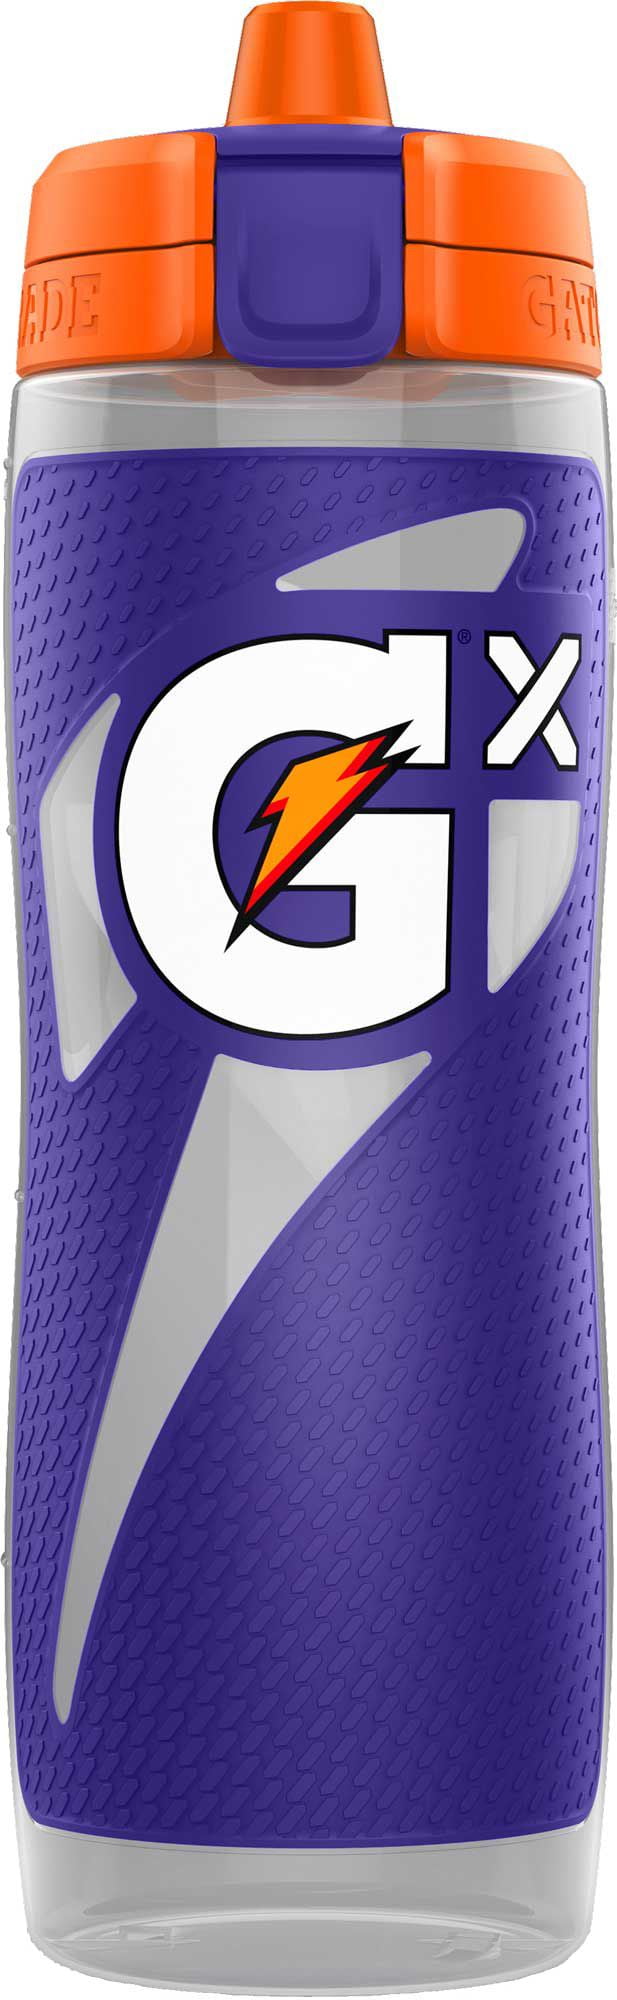 Gatorade Gx 30 oz. Bottle - Walmart.com 